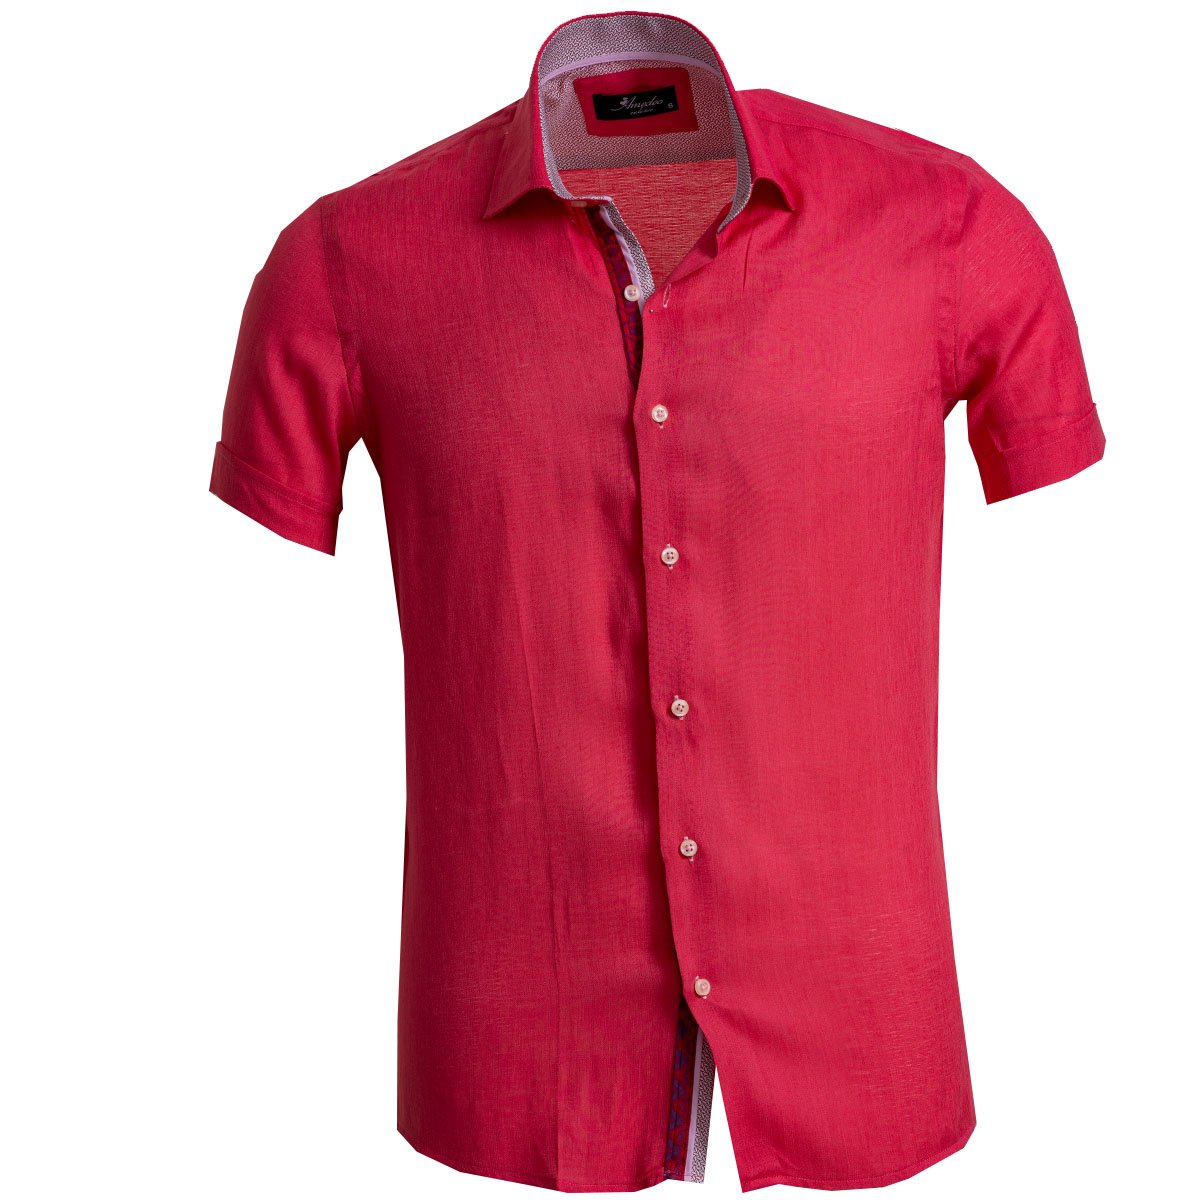 Men's Casual Short-Sleeve Shirts